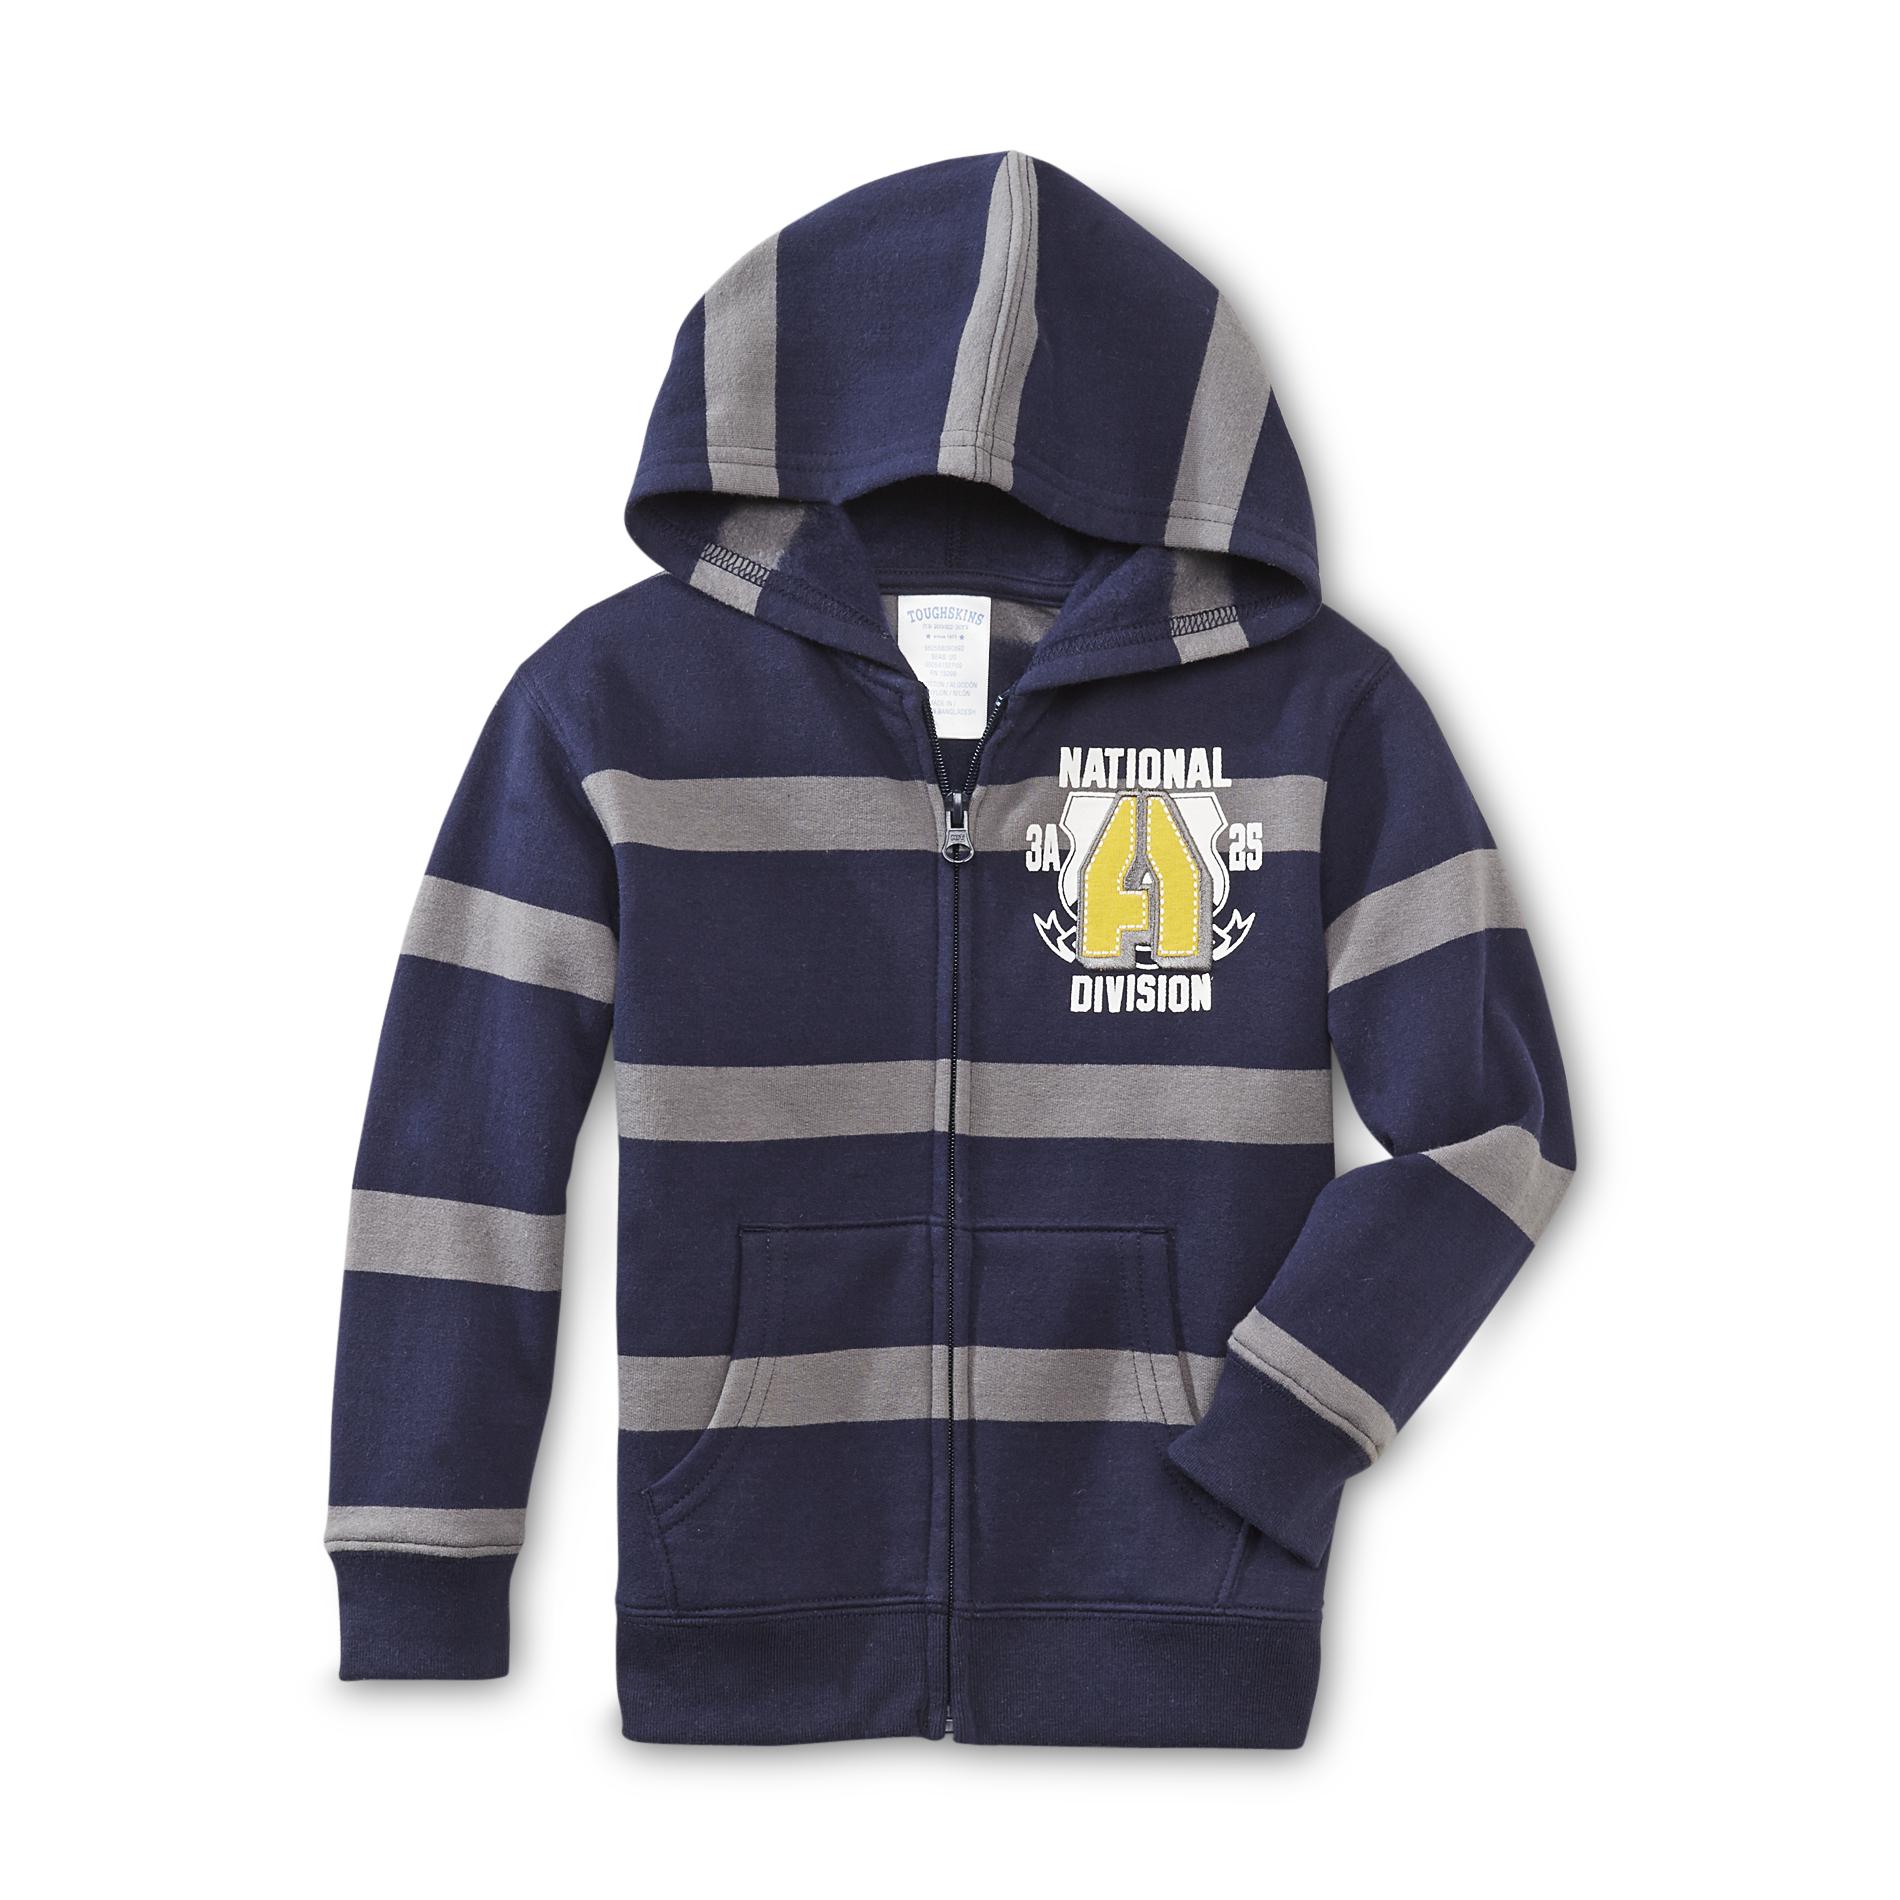 Toughskins Infant & Toddler Boy's Fleece-Lined Hoodie Jacket - Striped